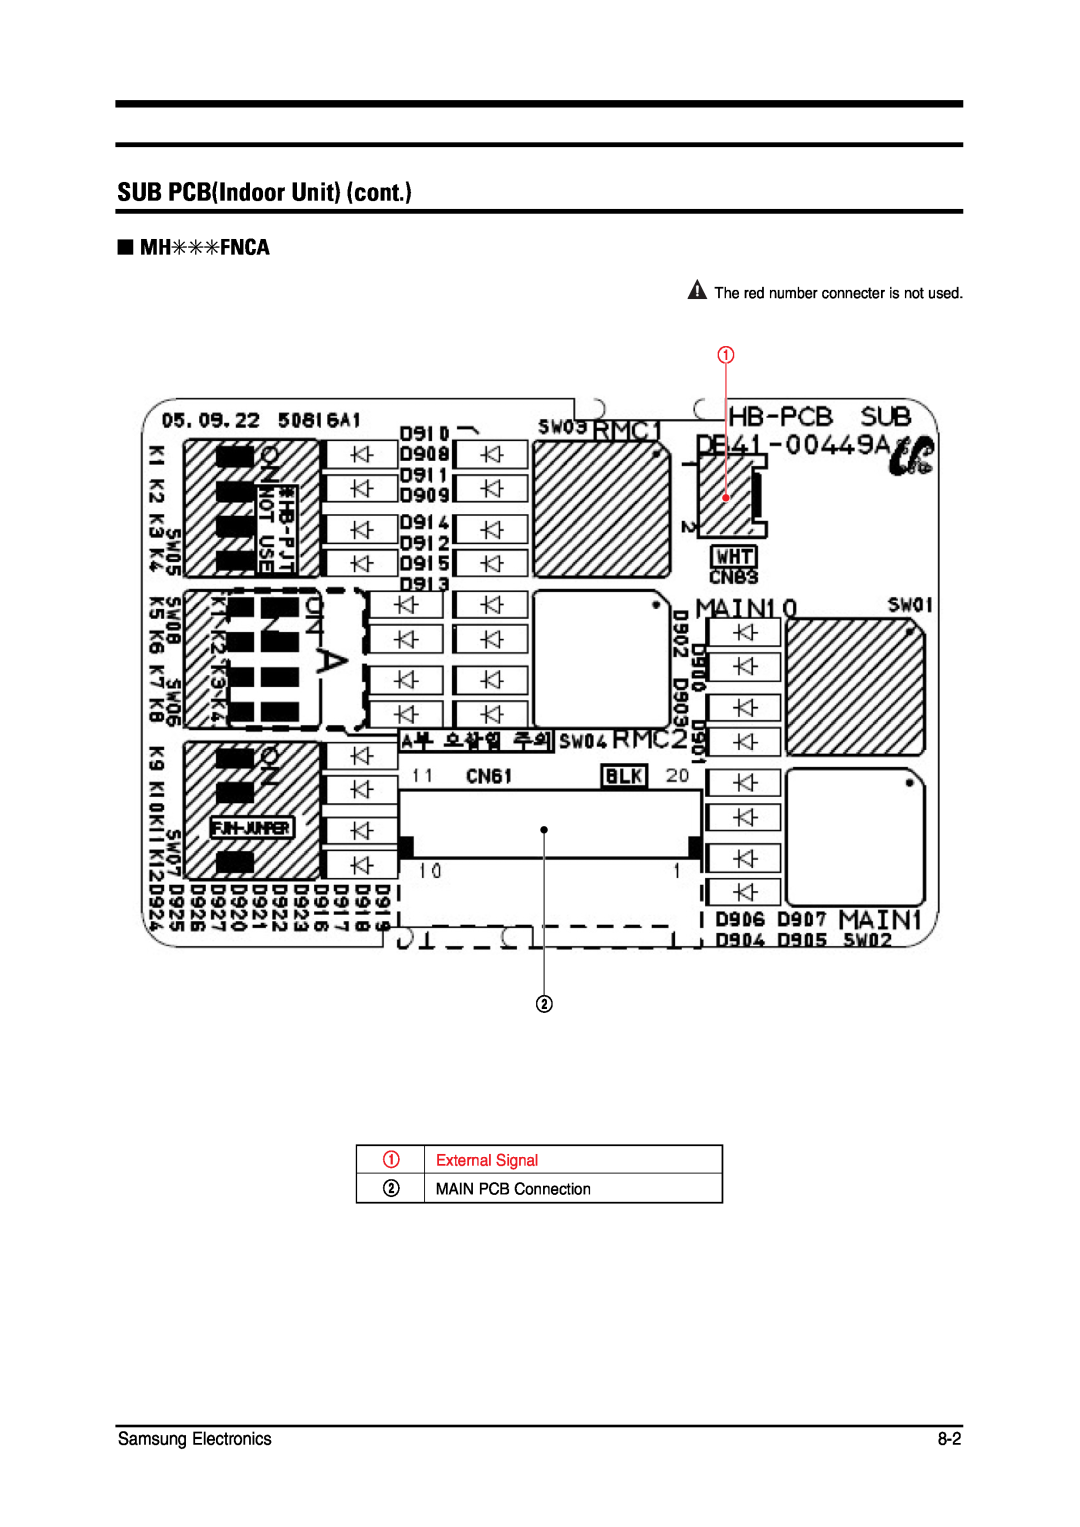 Samsung MH026FNCA service manual 02- Ġ&J@KKN2JEP Ġ?KJP, Mhfnca, Samsung Electronics 